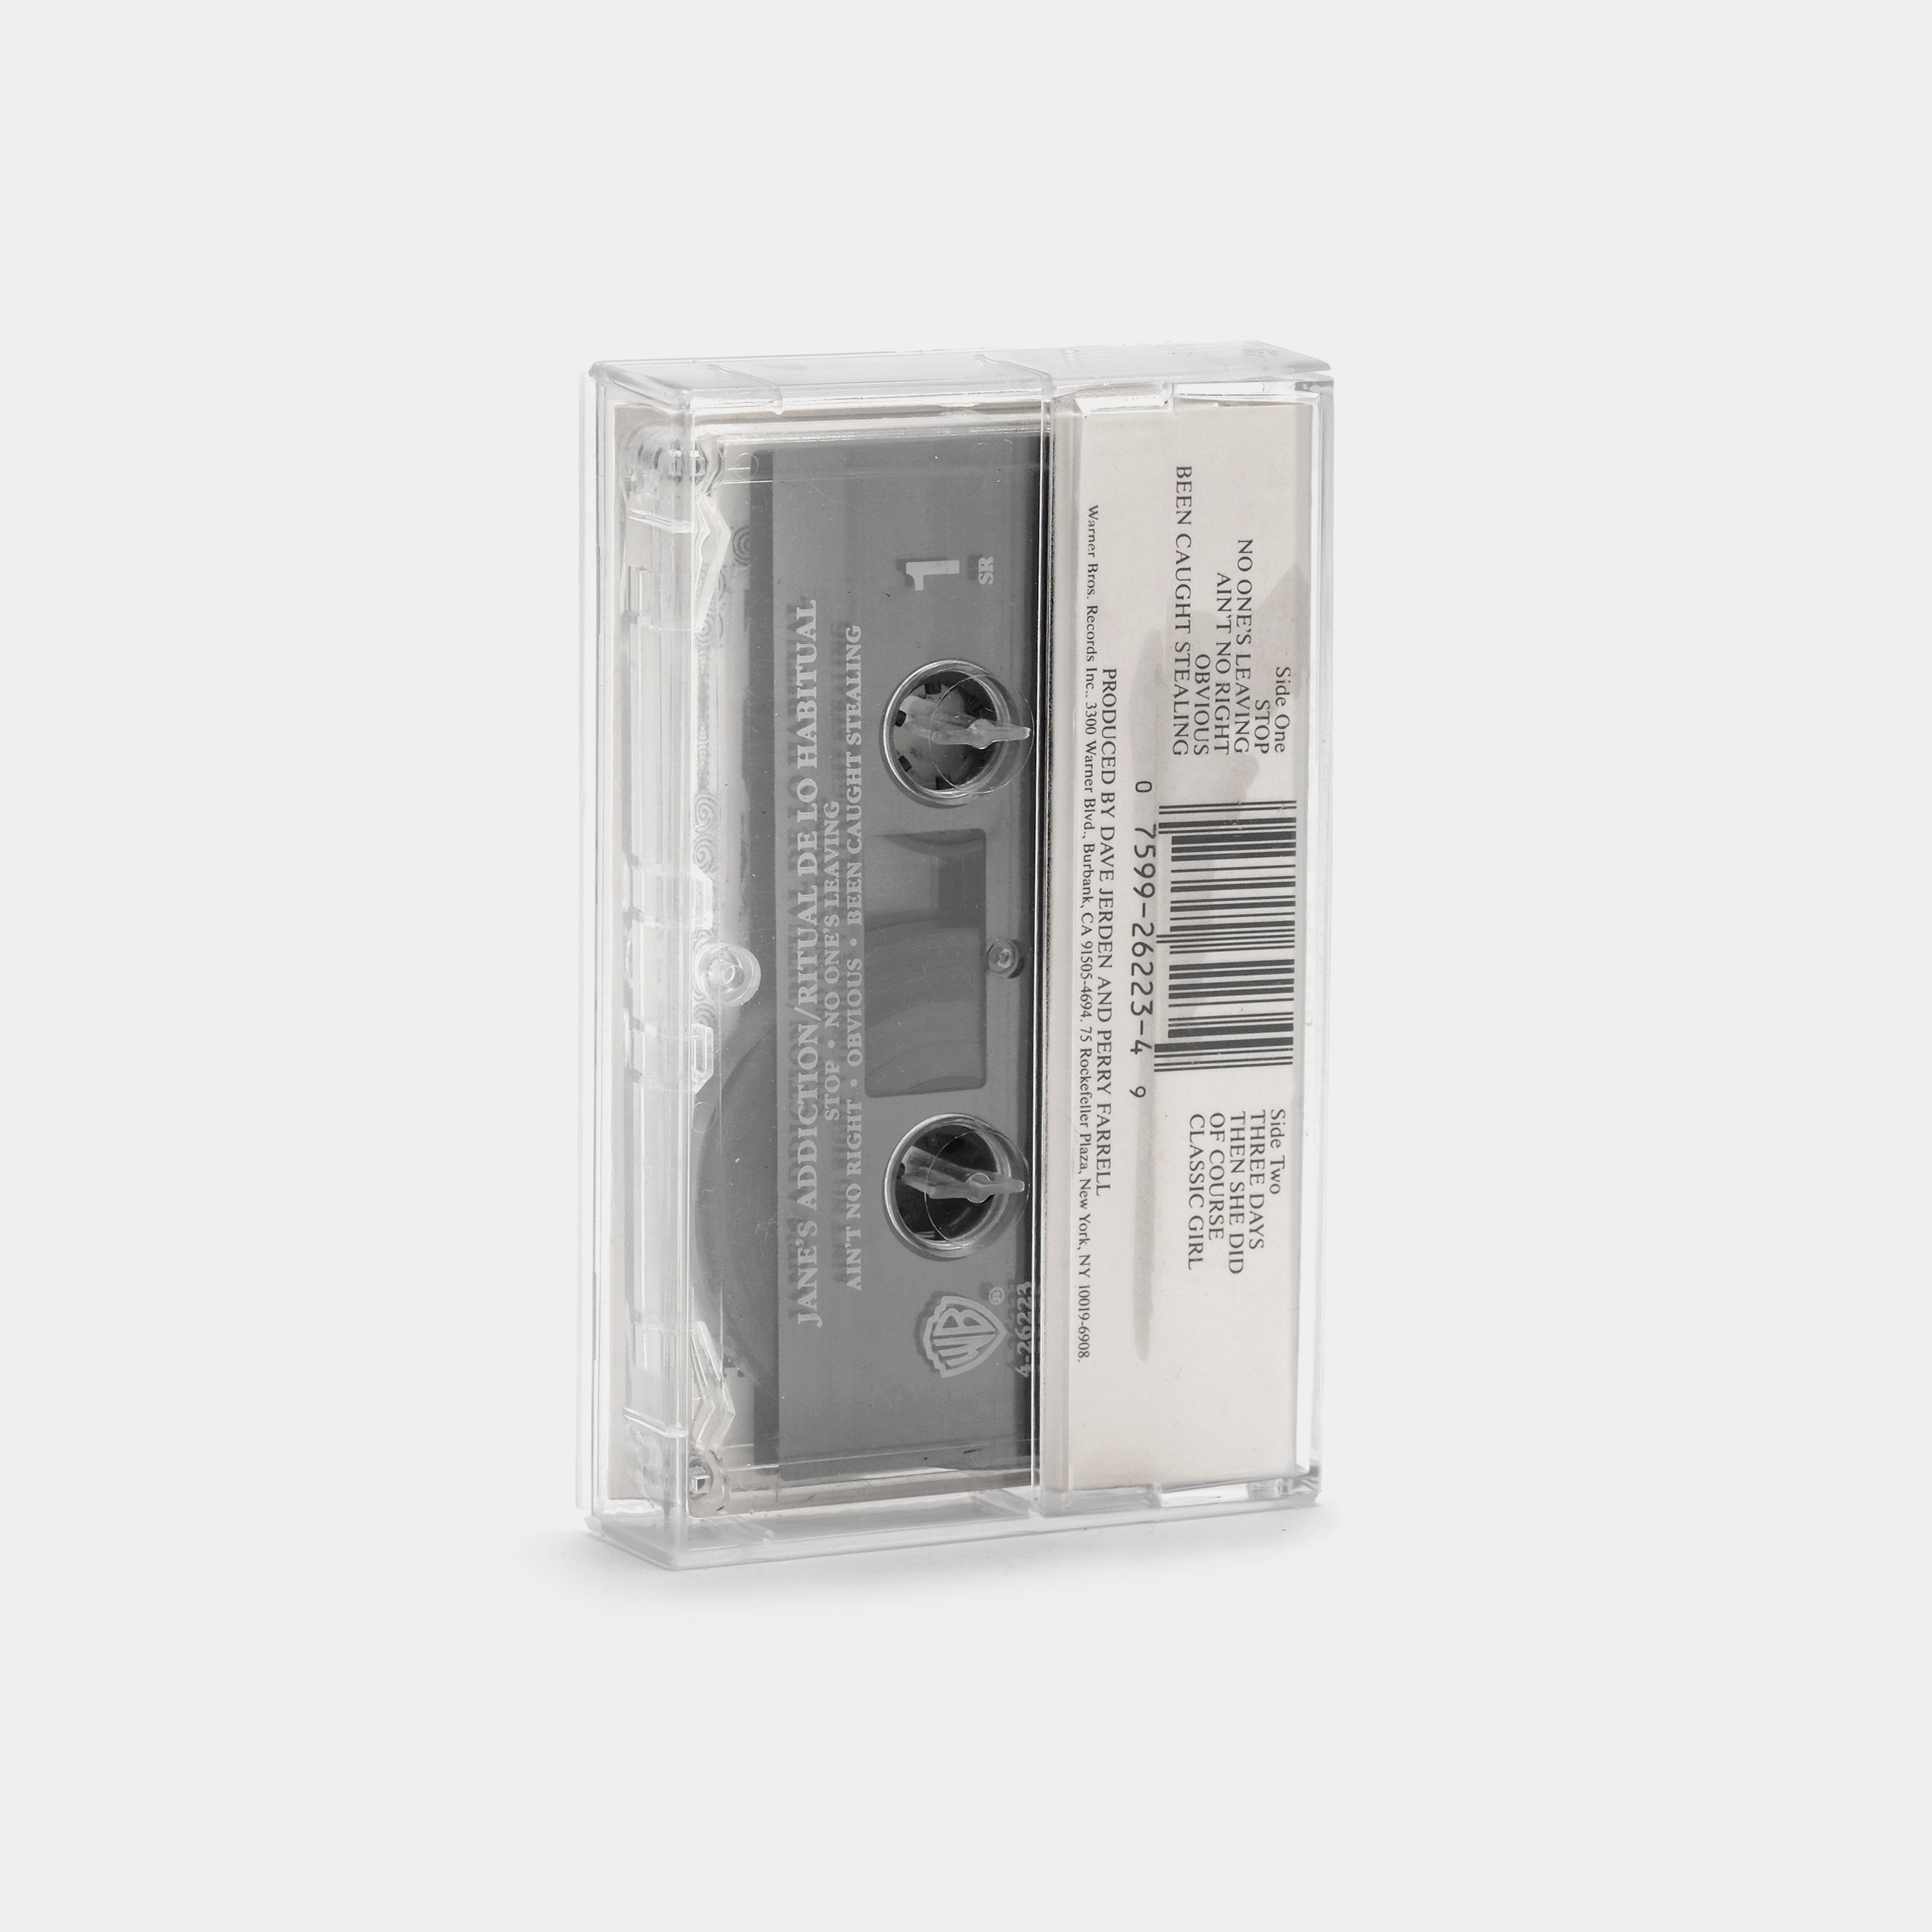 Jane's Addiction - Ritual De Lo Habitual Cassette Tape